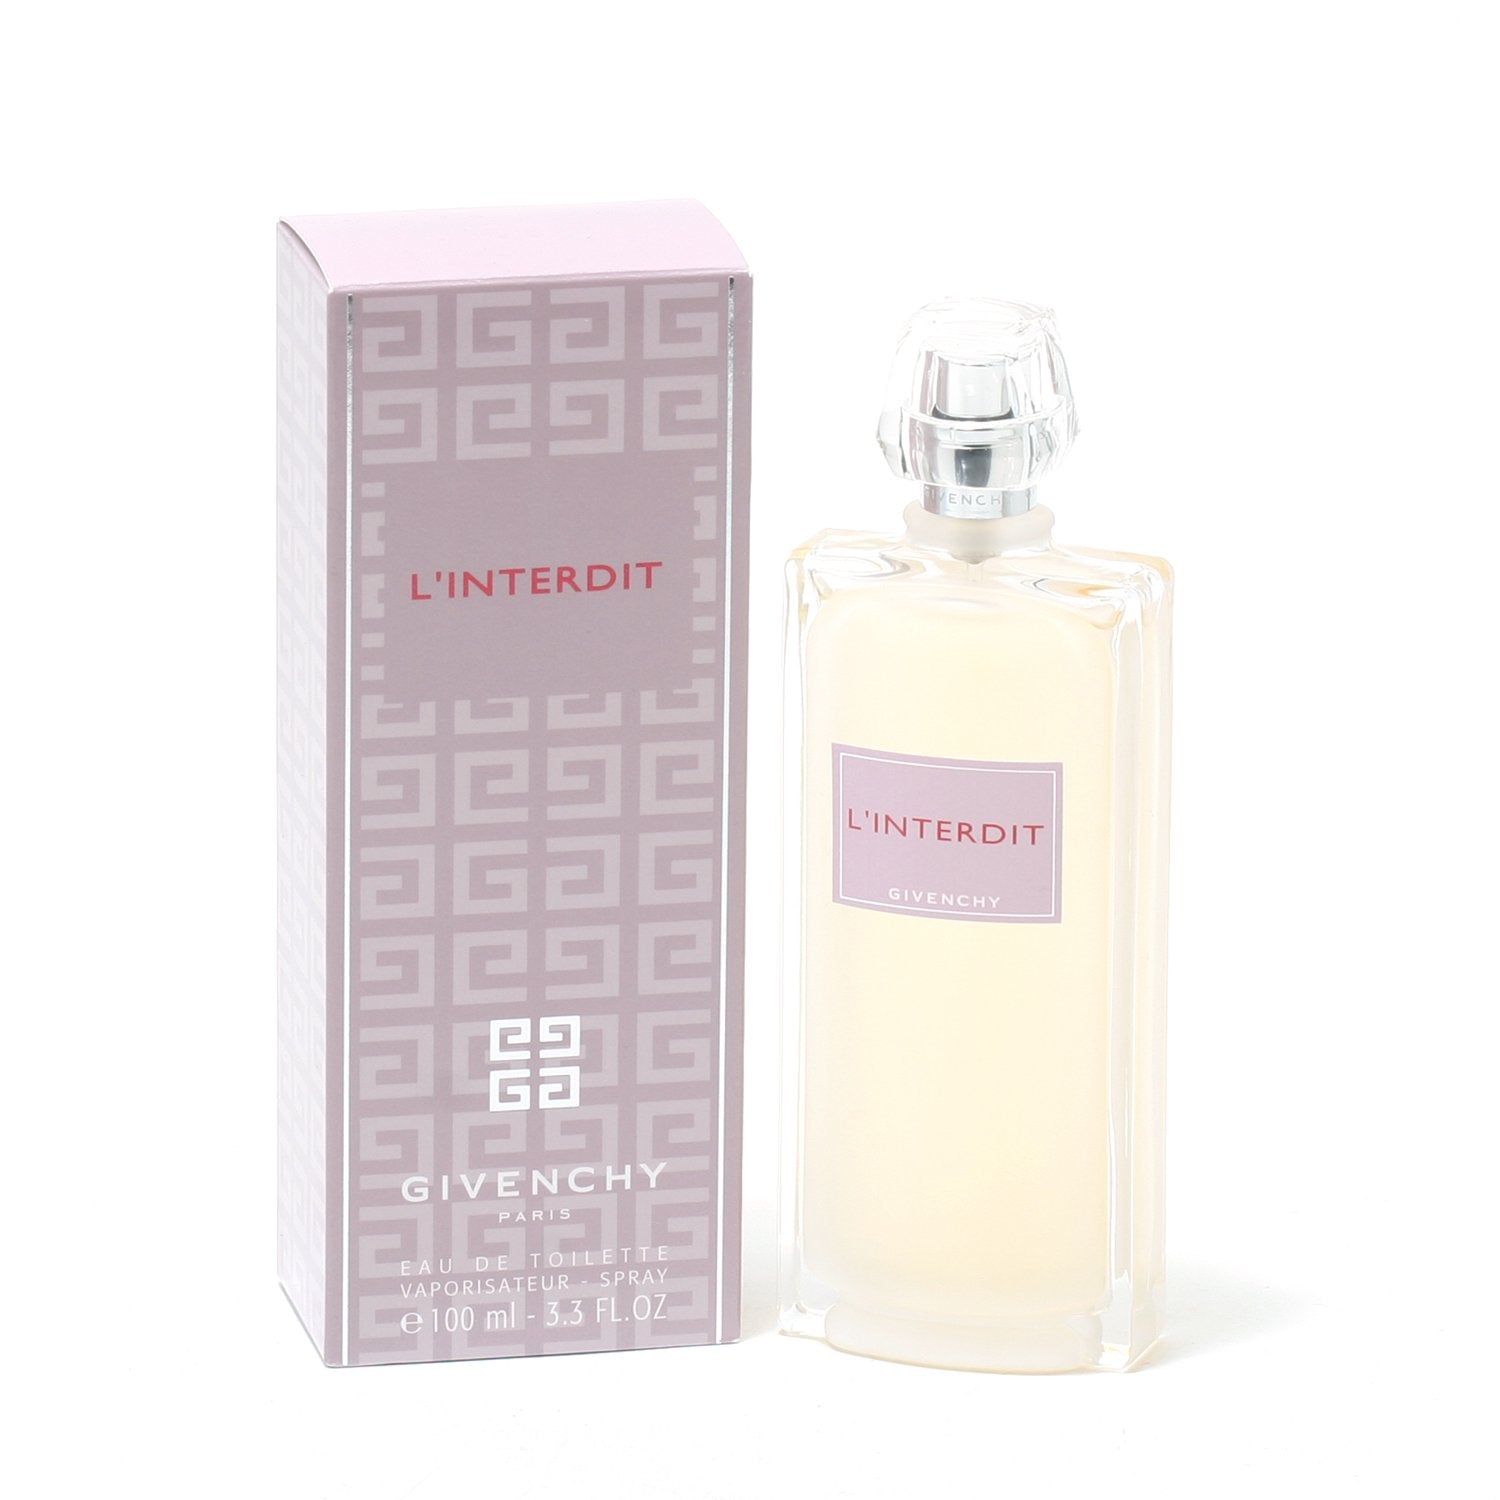 Perfume - L'INTERDIT FOR WOMEN BY GIVENCHY - EAU DE TOILETTE SPRAY, 3.3 OZ